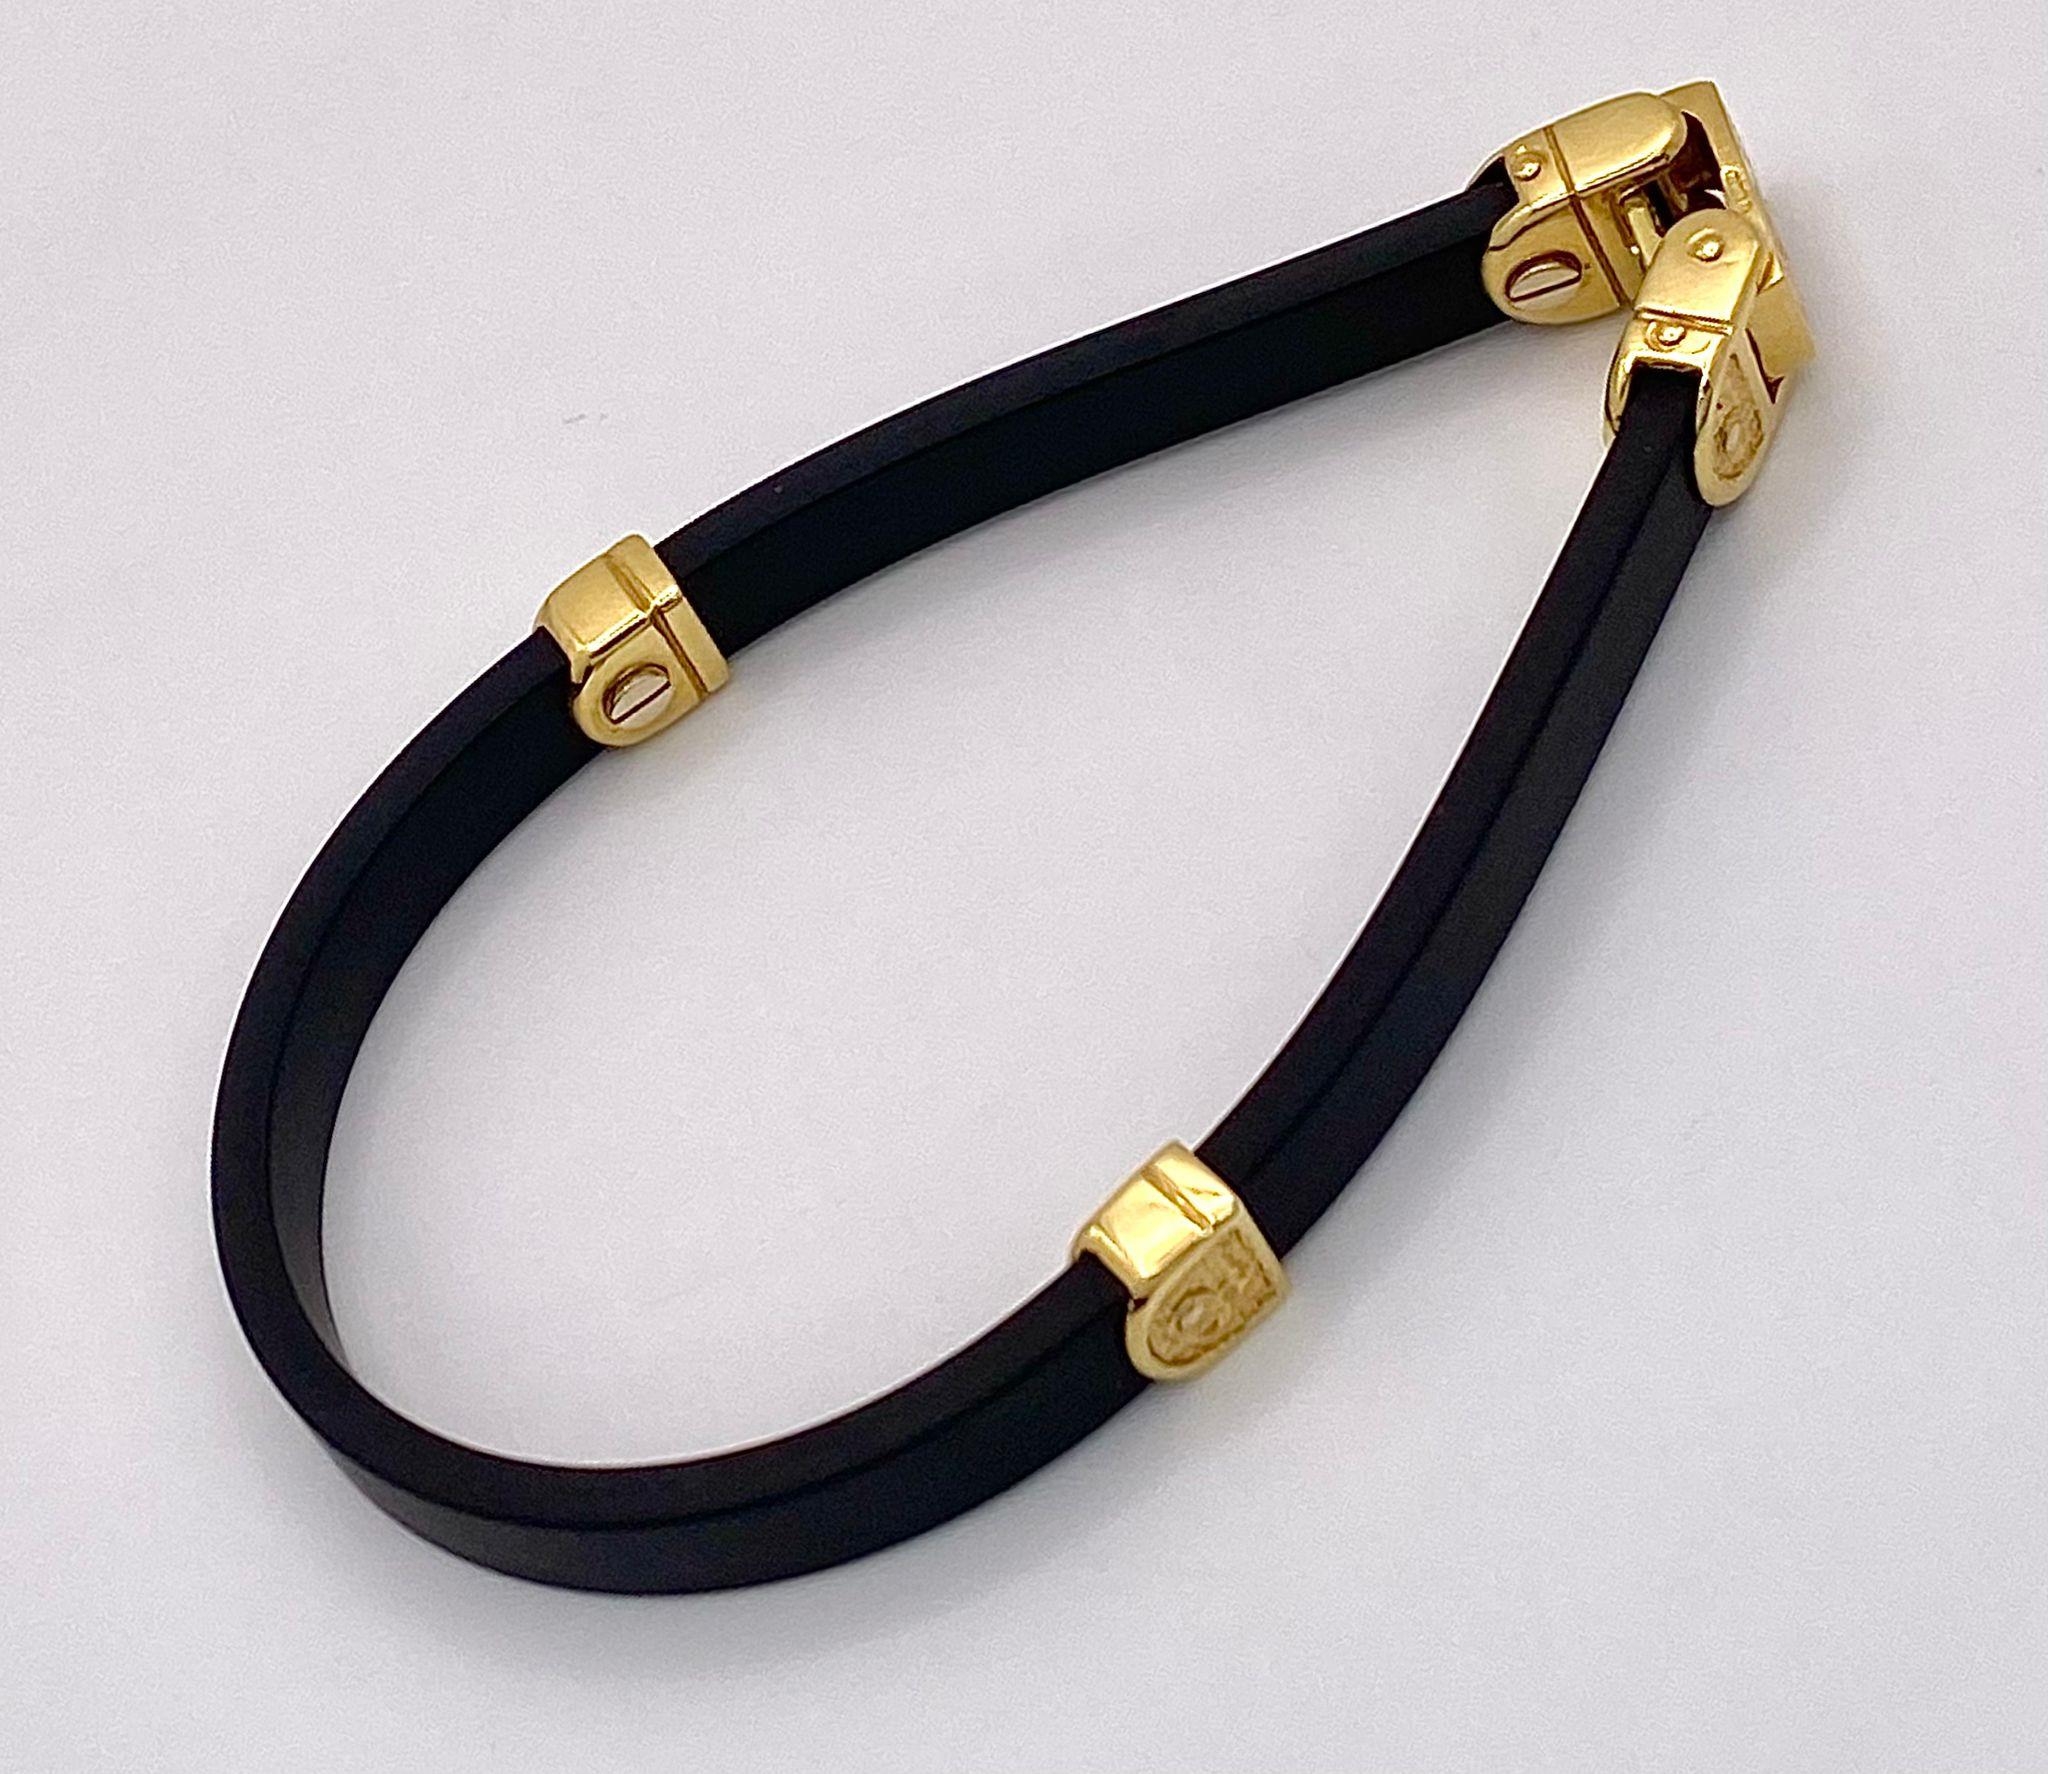 A Bersani Designer Black Silicone and 18K Yellow Gold Stylish Comfort Bracelet. - Image 2 of 6